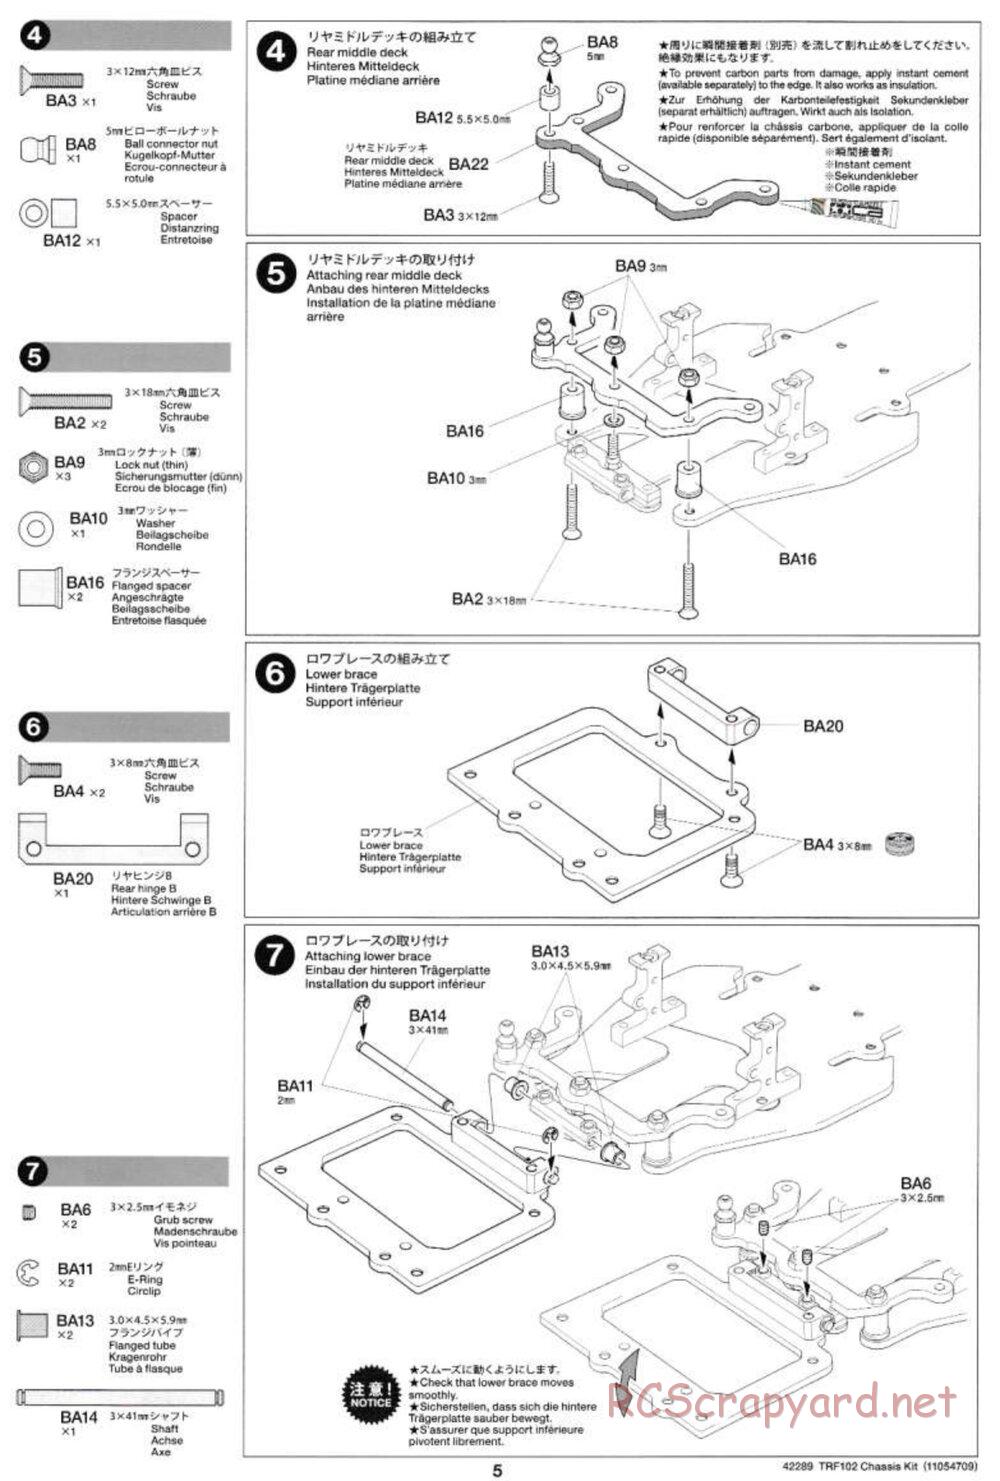 Tamiya - TRF102 Chassis - Manual - Page 5